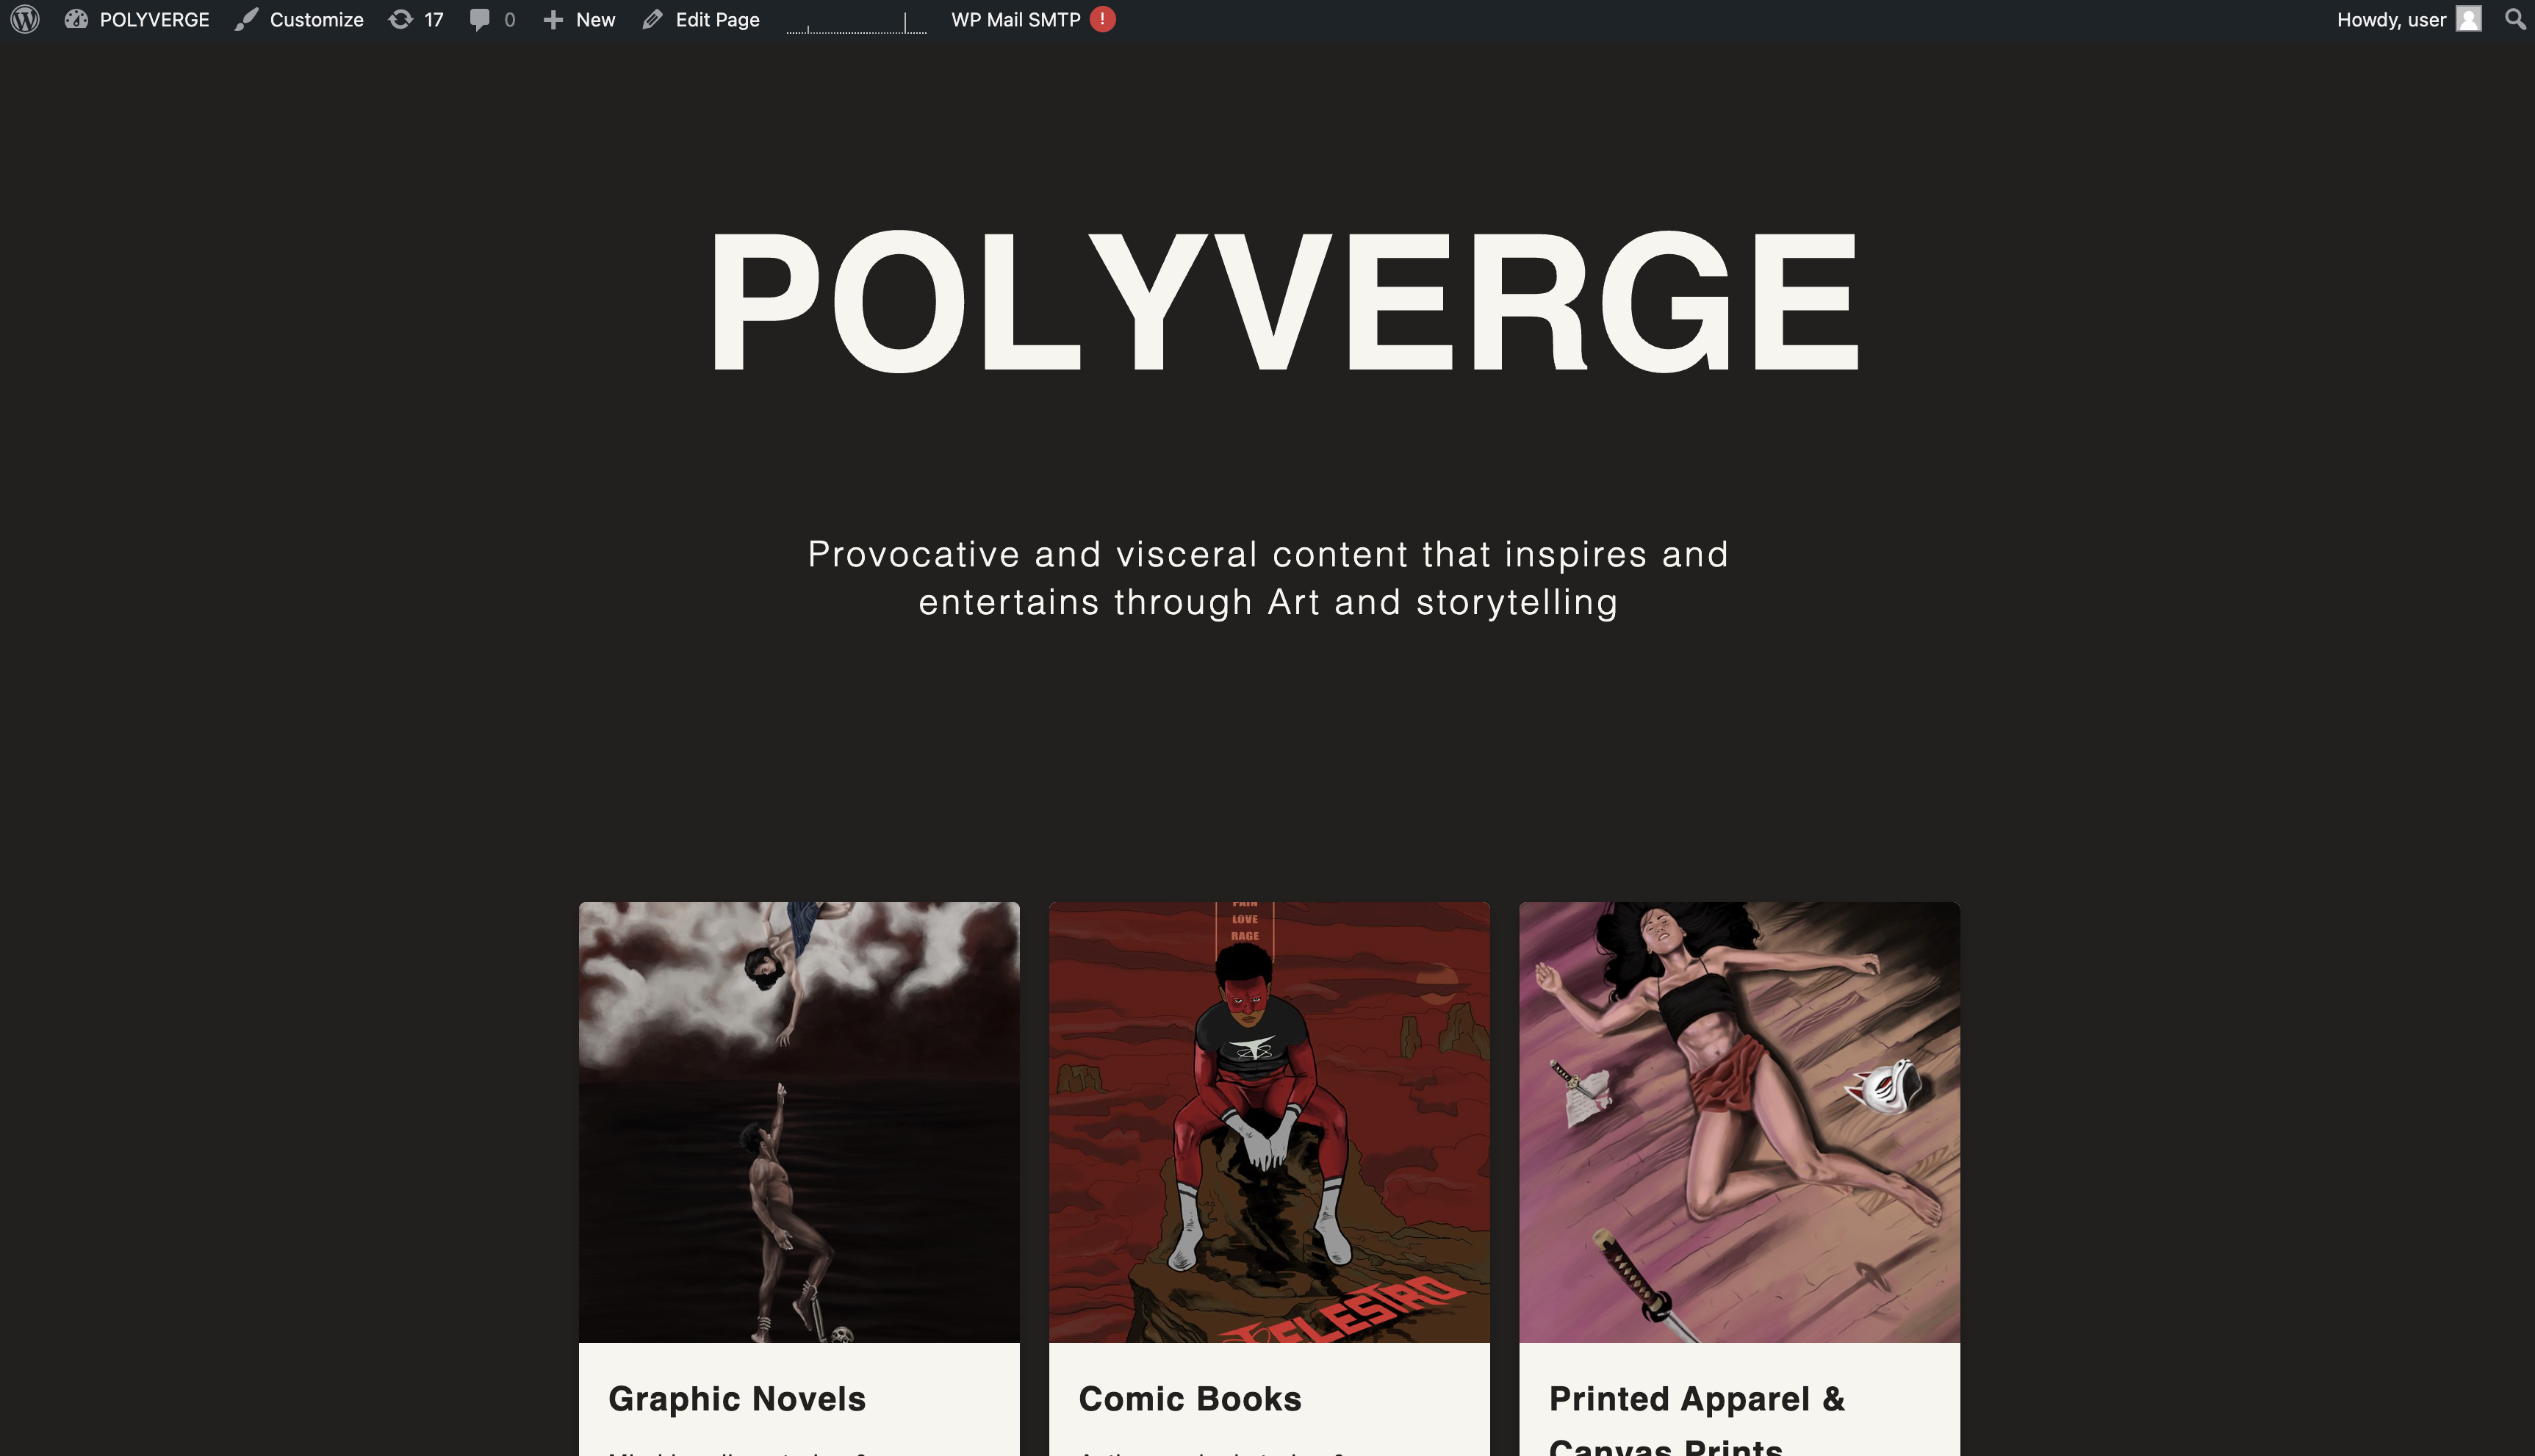 Image of Polyverge E commerce website